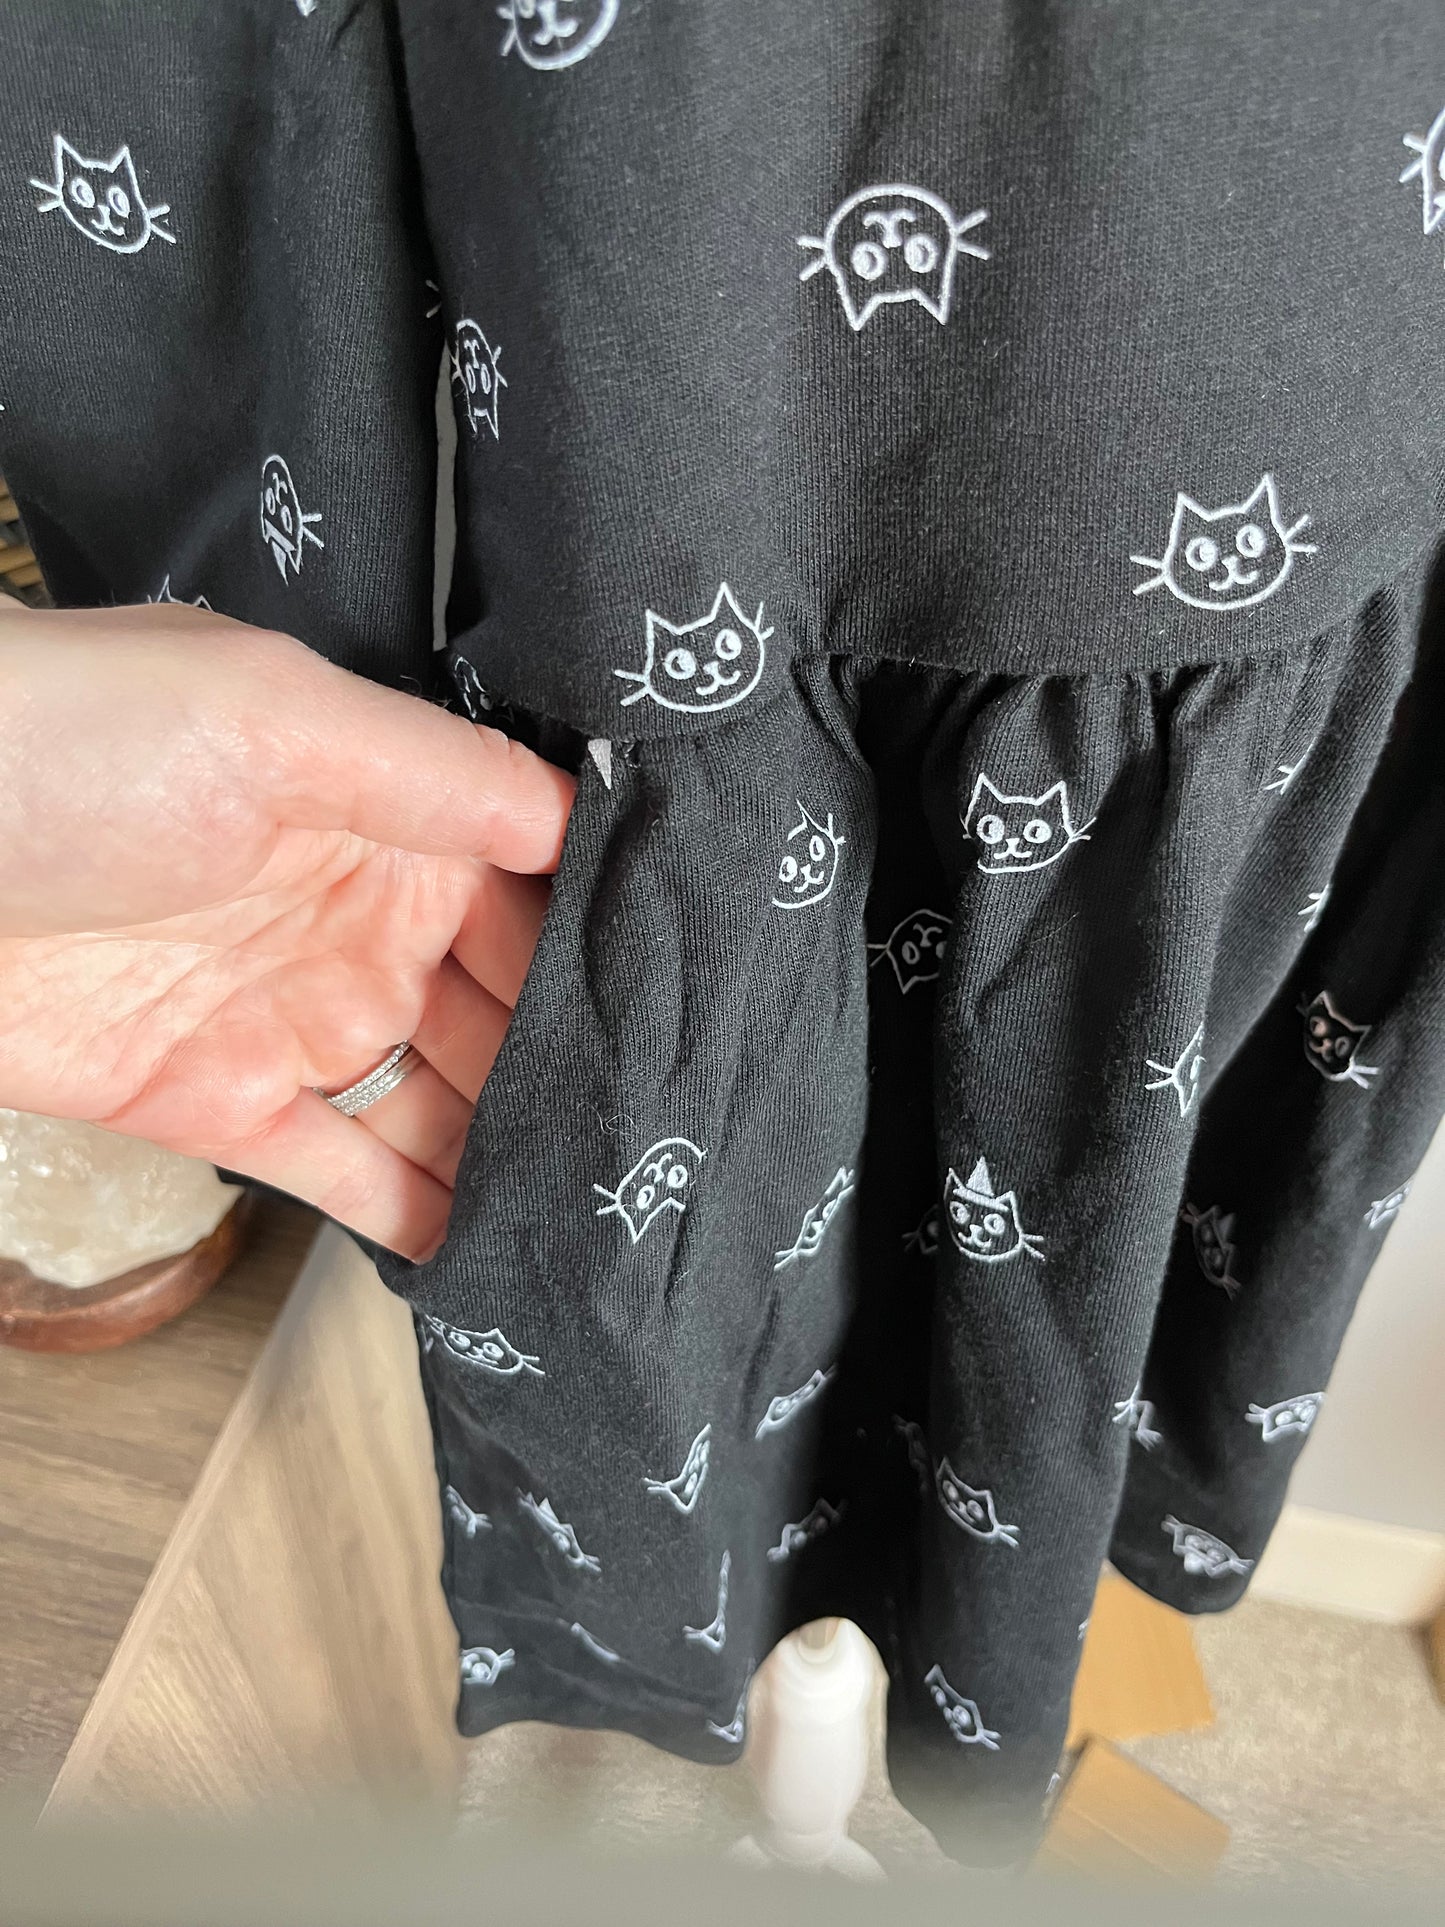 NWT Size XL (14) Cat & Jack Cat Dress with pockets!